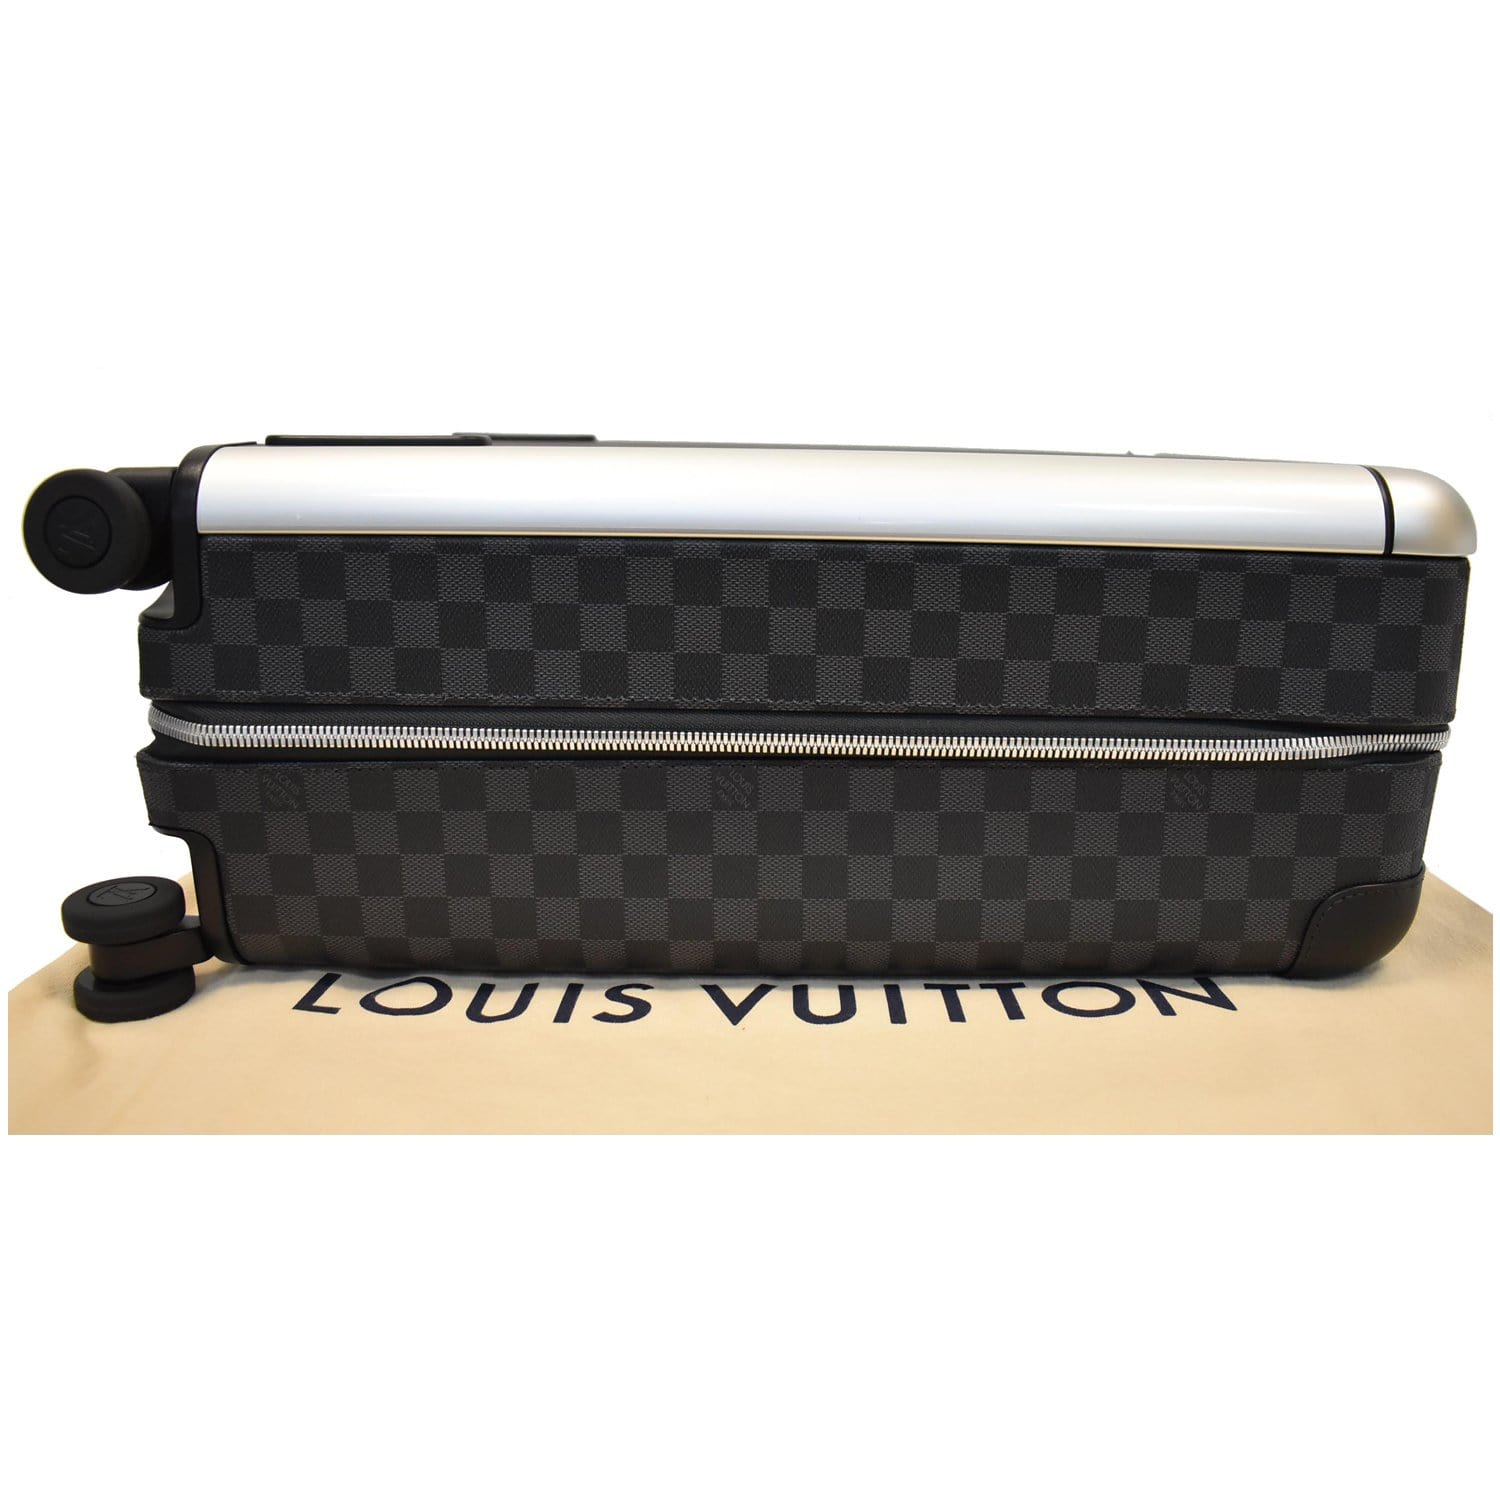 Louis Vuitton Monogram Canvas Horizon 50 Suitcase Louis Vuitton